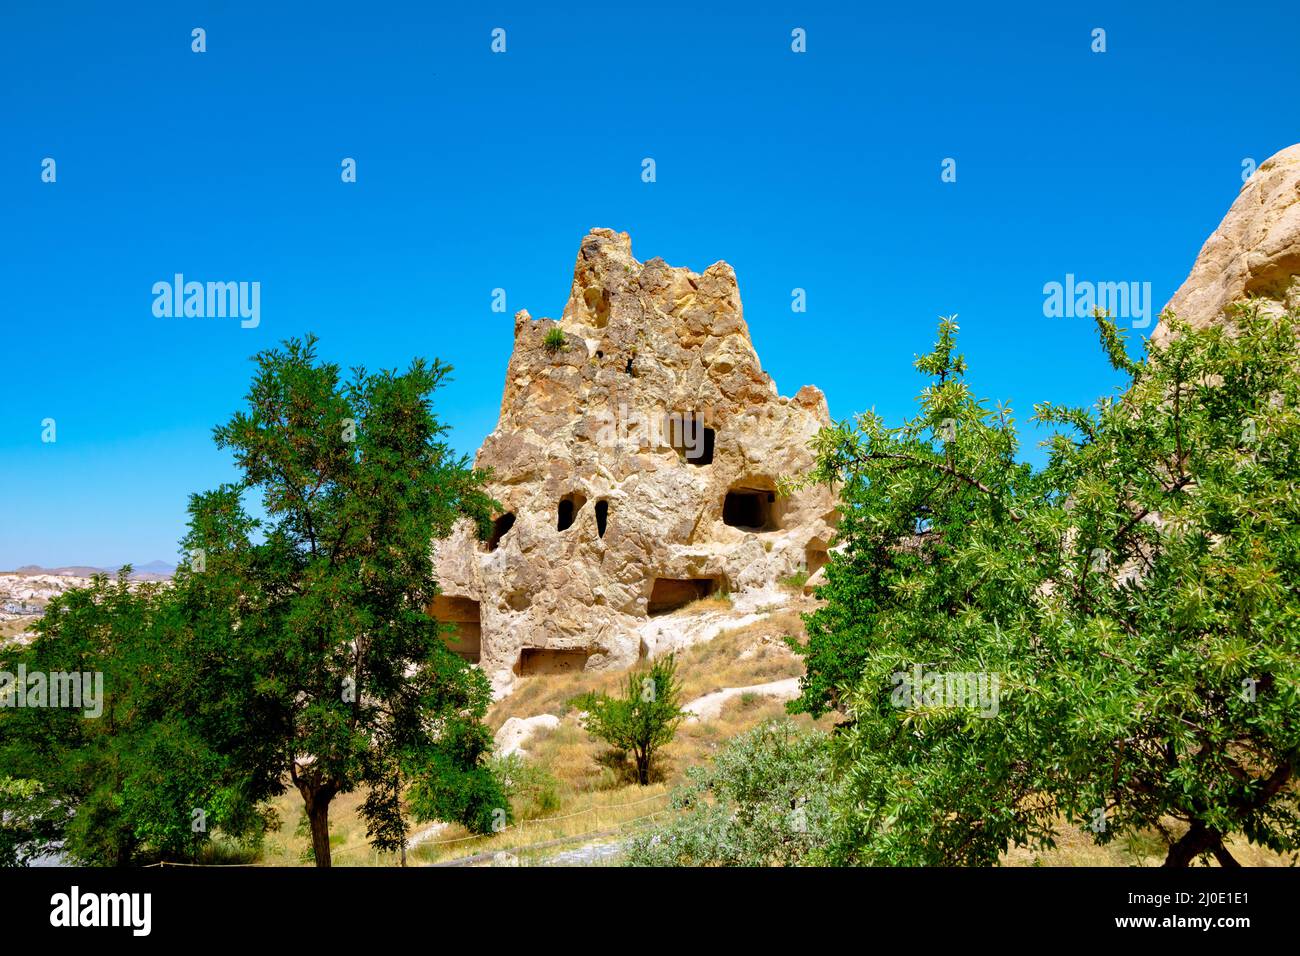 Fairy Chimneys or Hoodoos in Goreme Open Air Museum in Cappadocia Turkey. Travel to Turkey background photo. Stock Photo